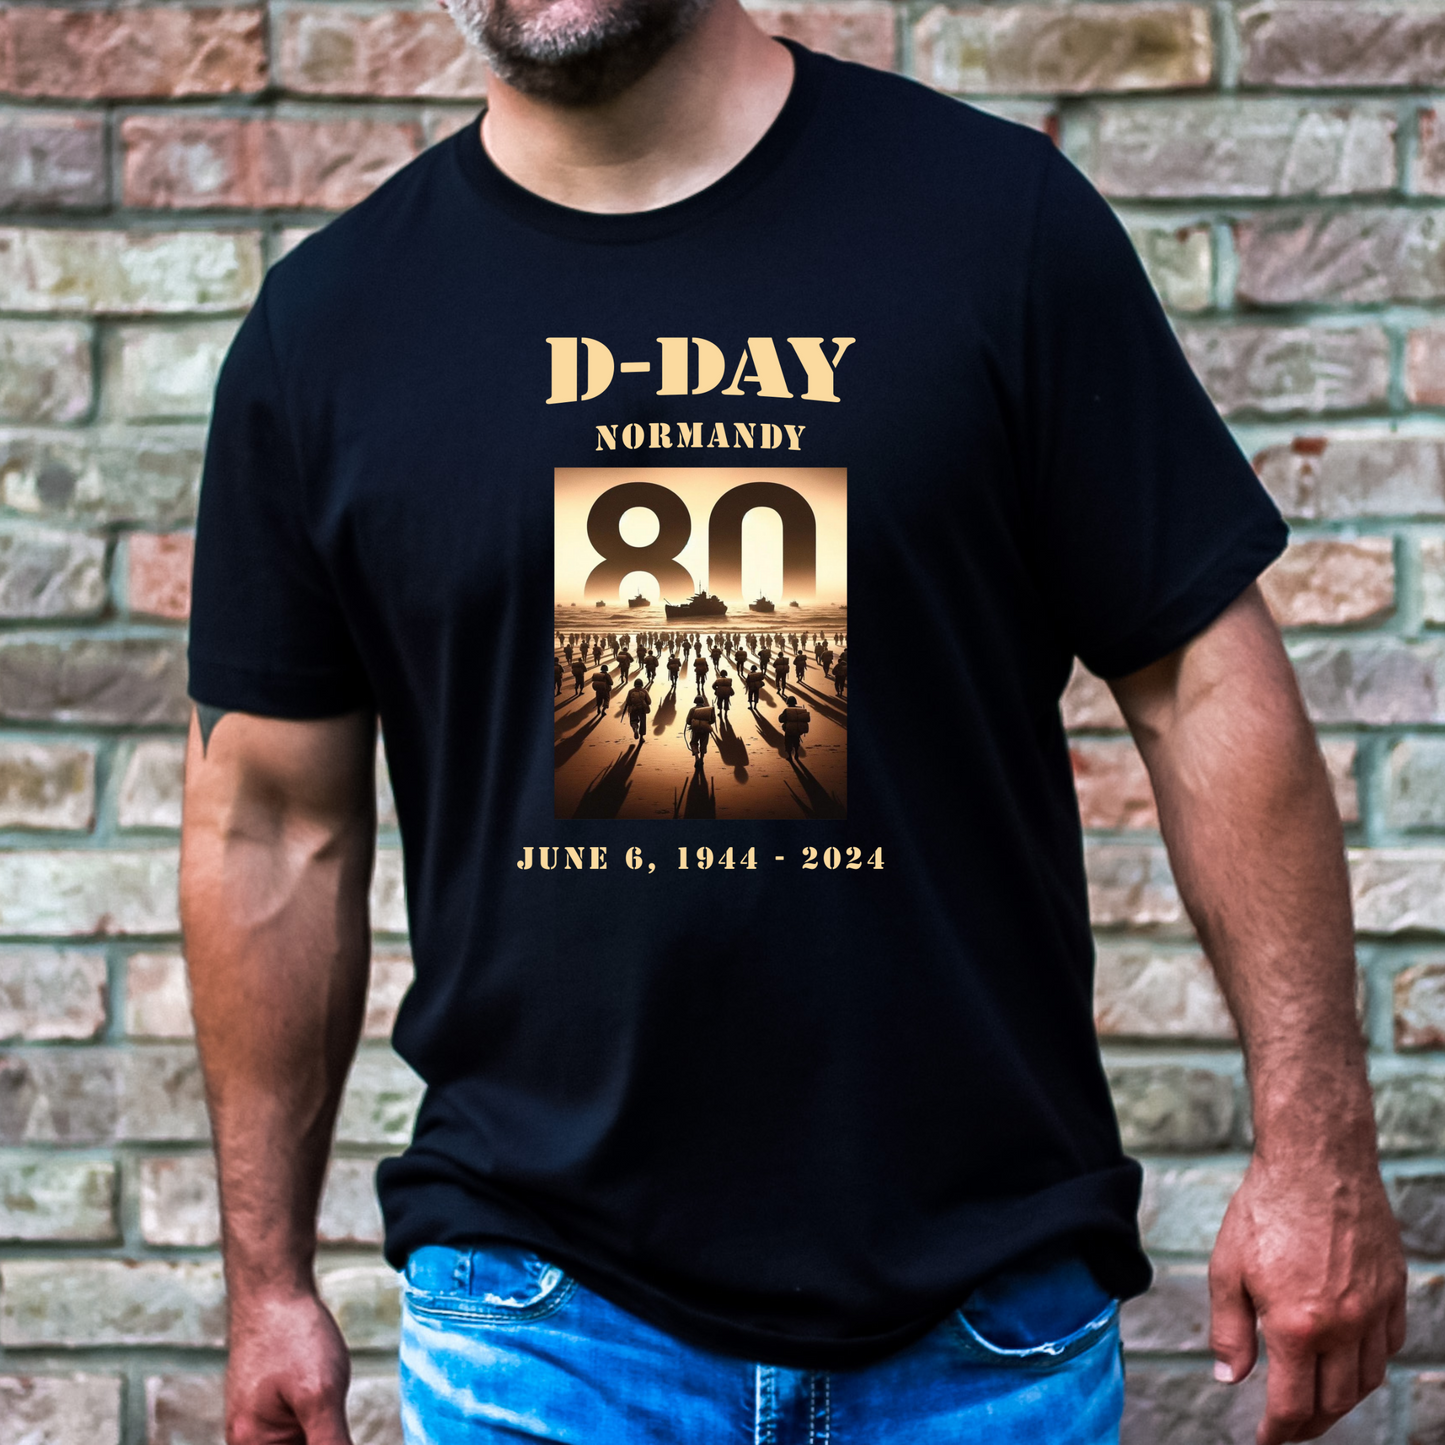 D-Day Normandy 80th Anniversary T-Shirt - Military History Tee - Mardonyx T-Shirt XS / Black